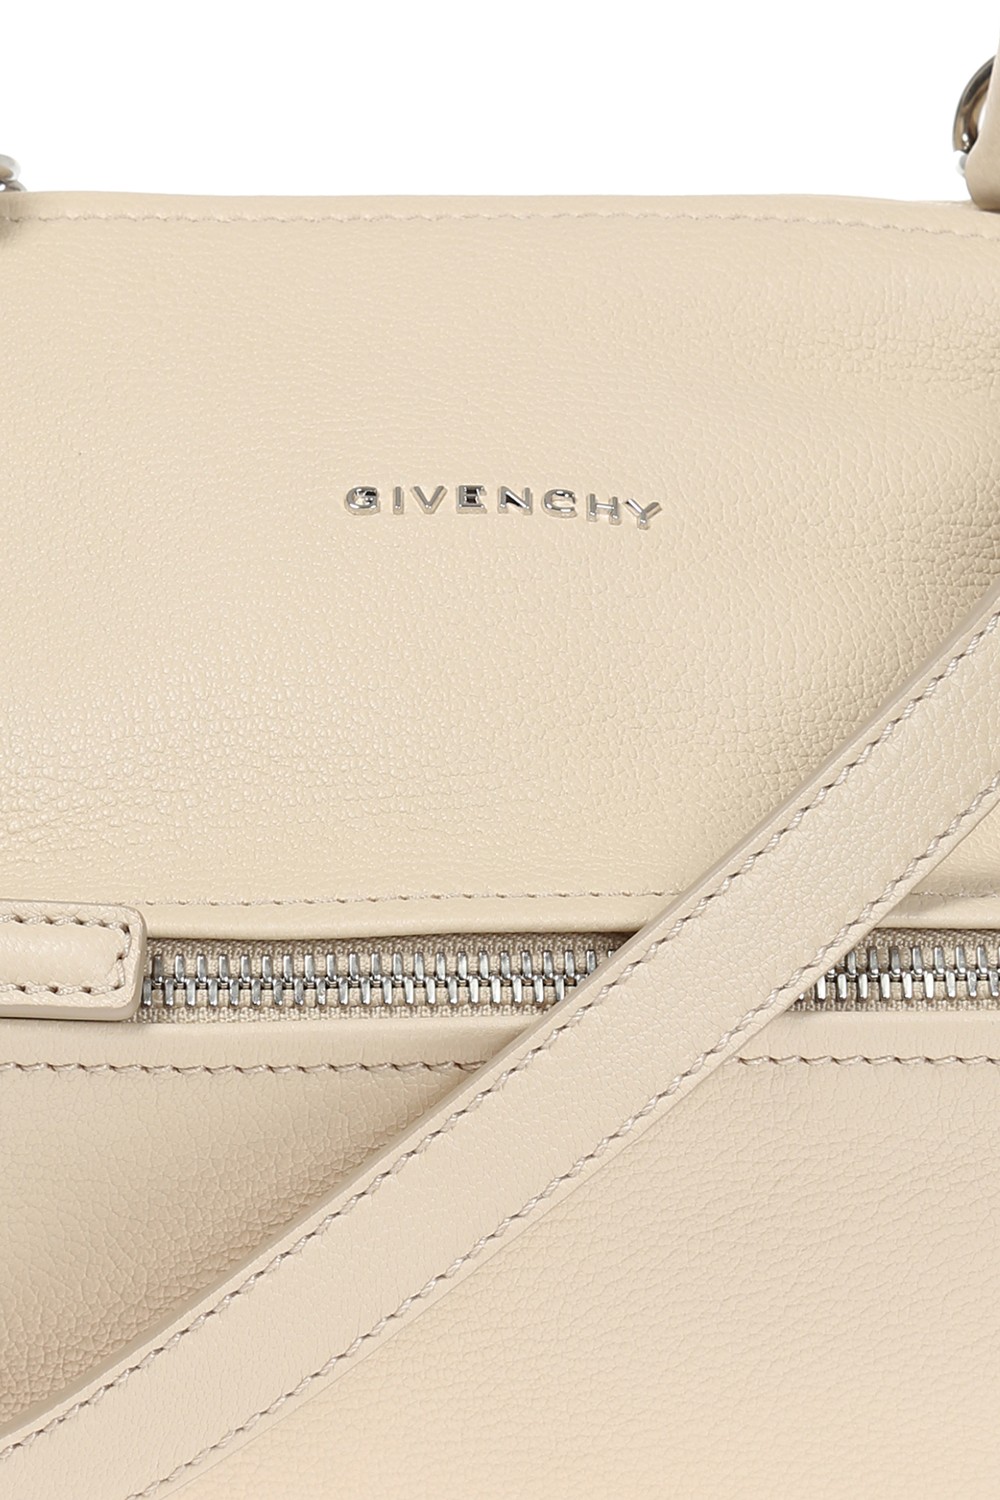 Givenchy Pandora Shoulder bag 359970